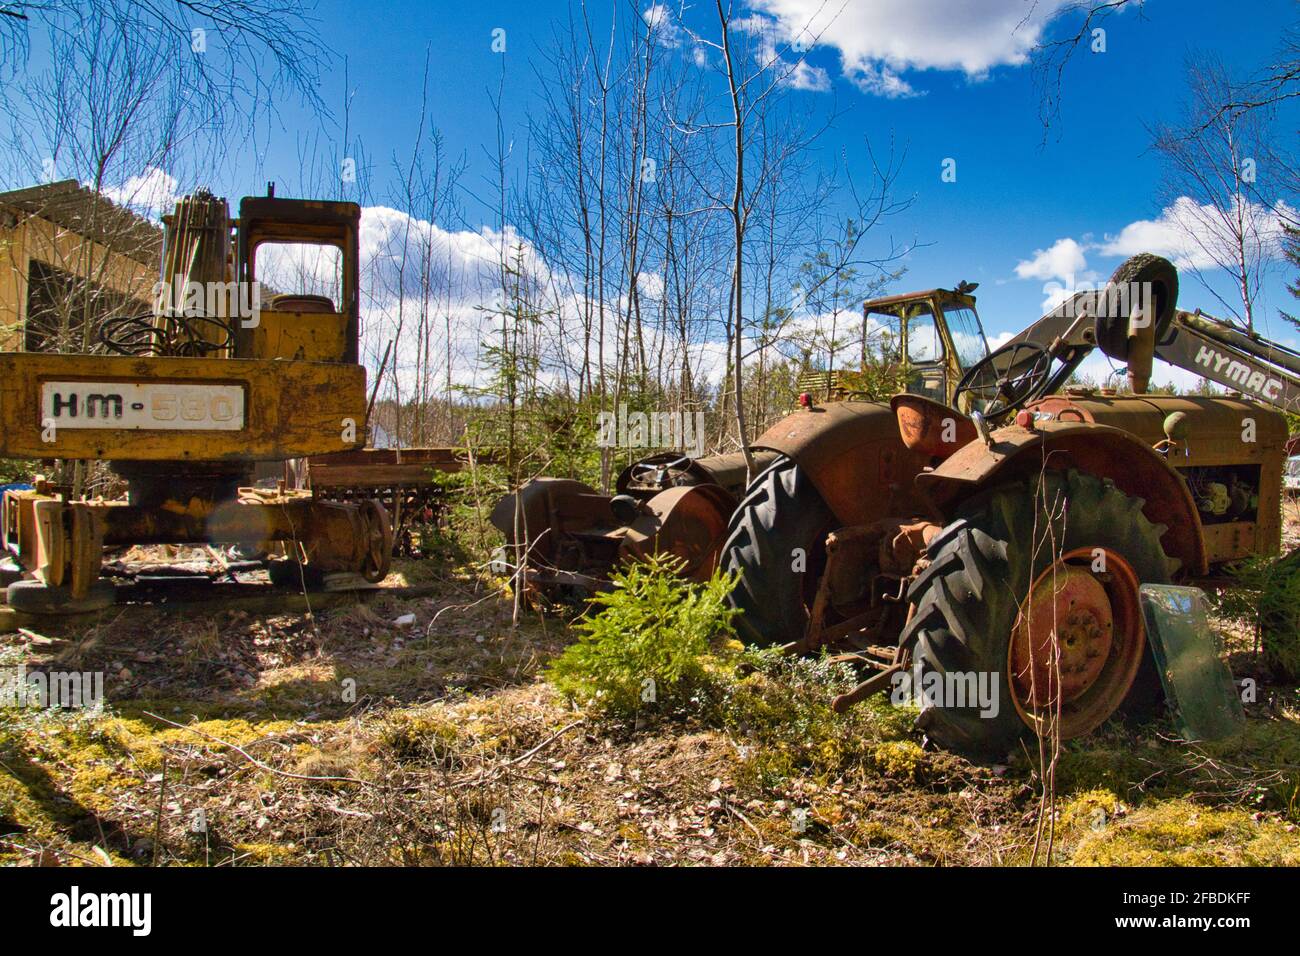 Junkyard tractors and Hymac excavator Stock Photo